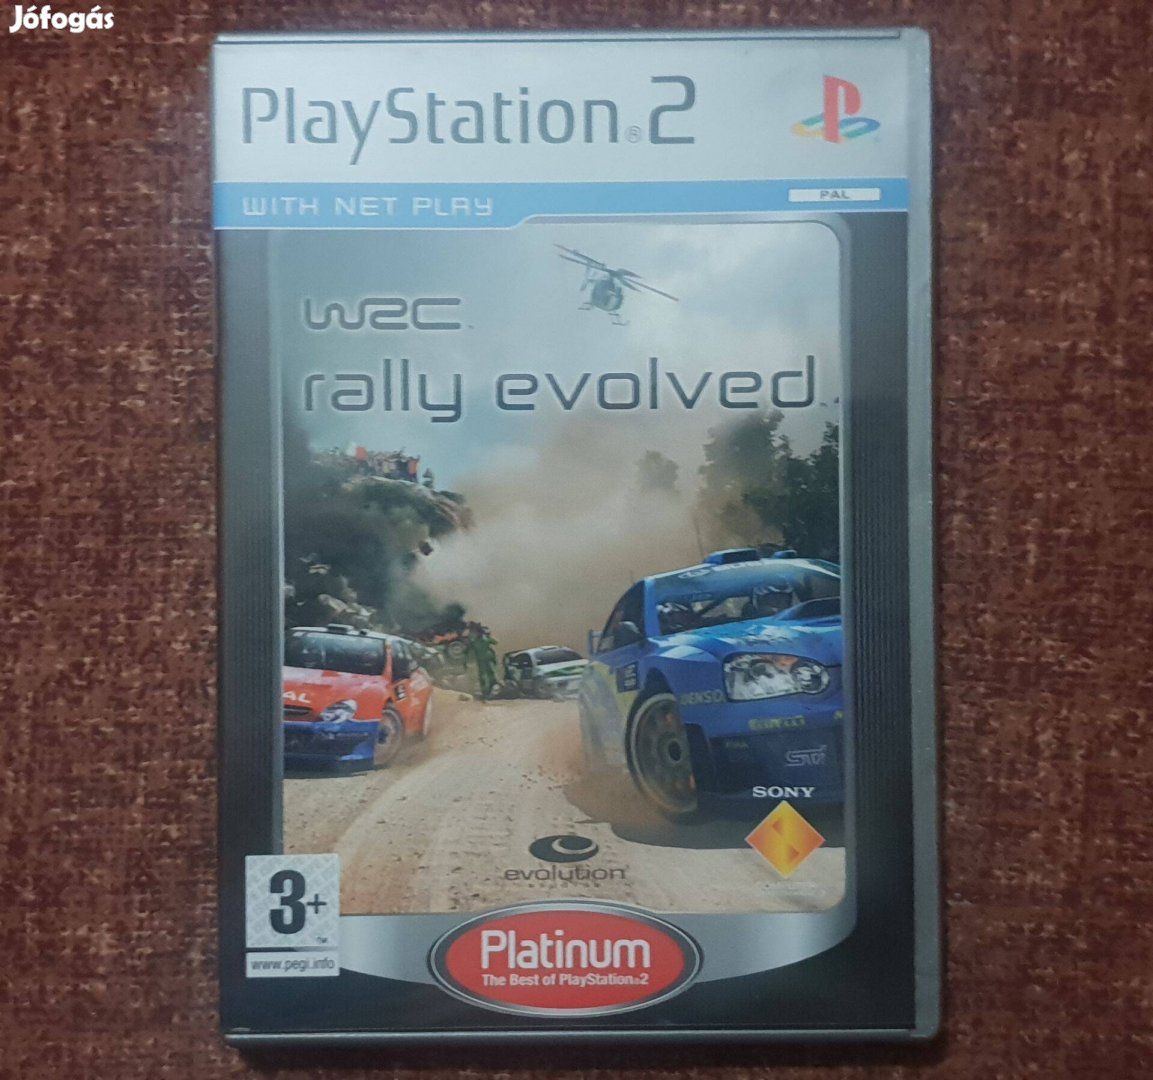 WRC Rally Evoved Playstation 2 eredeti lemez ( 3500 Ft )